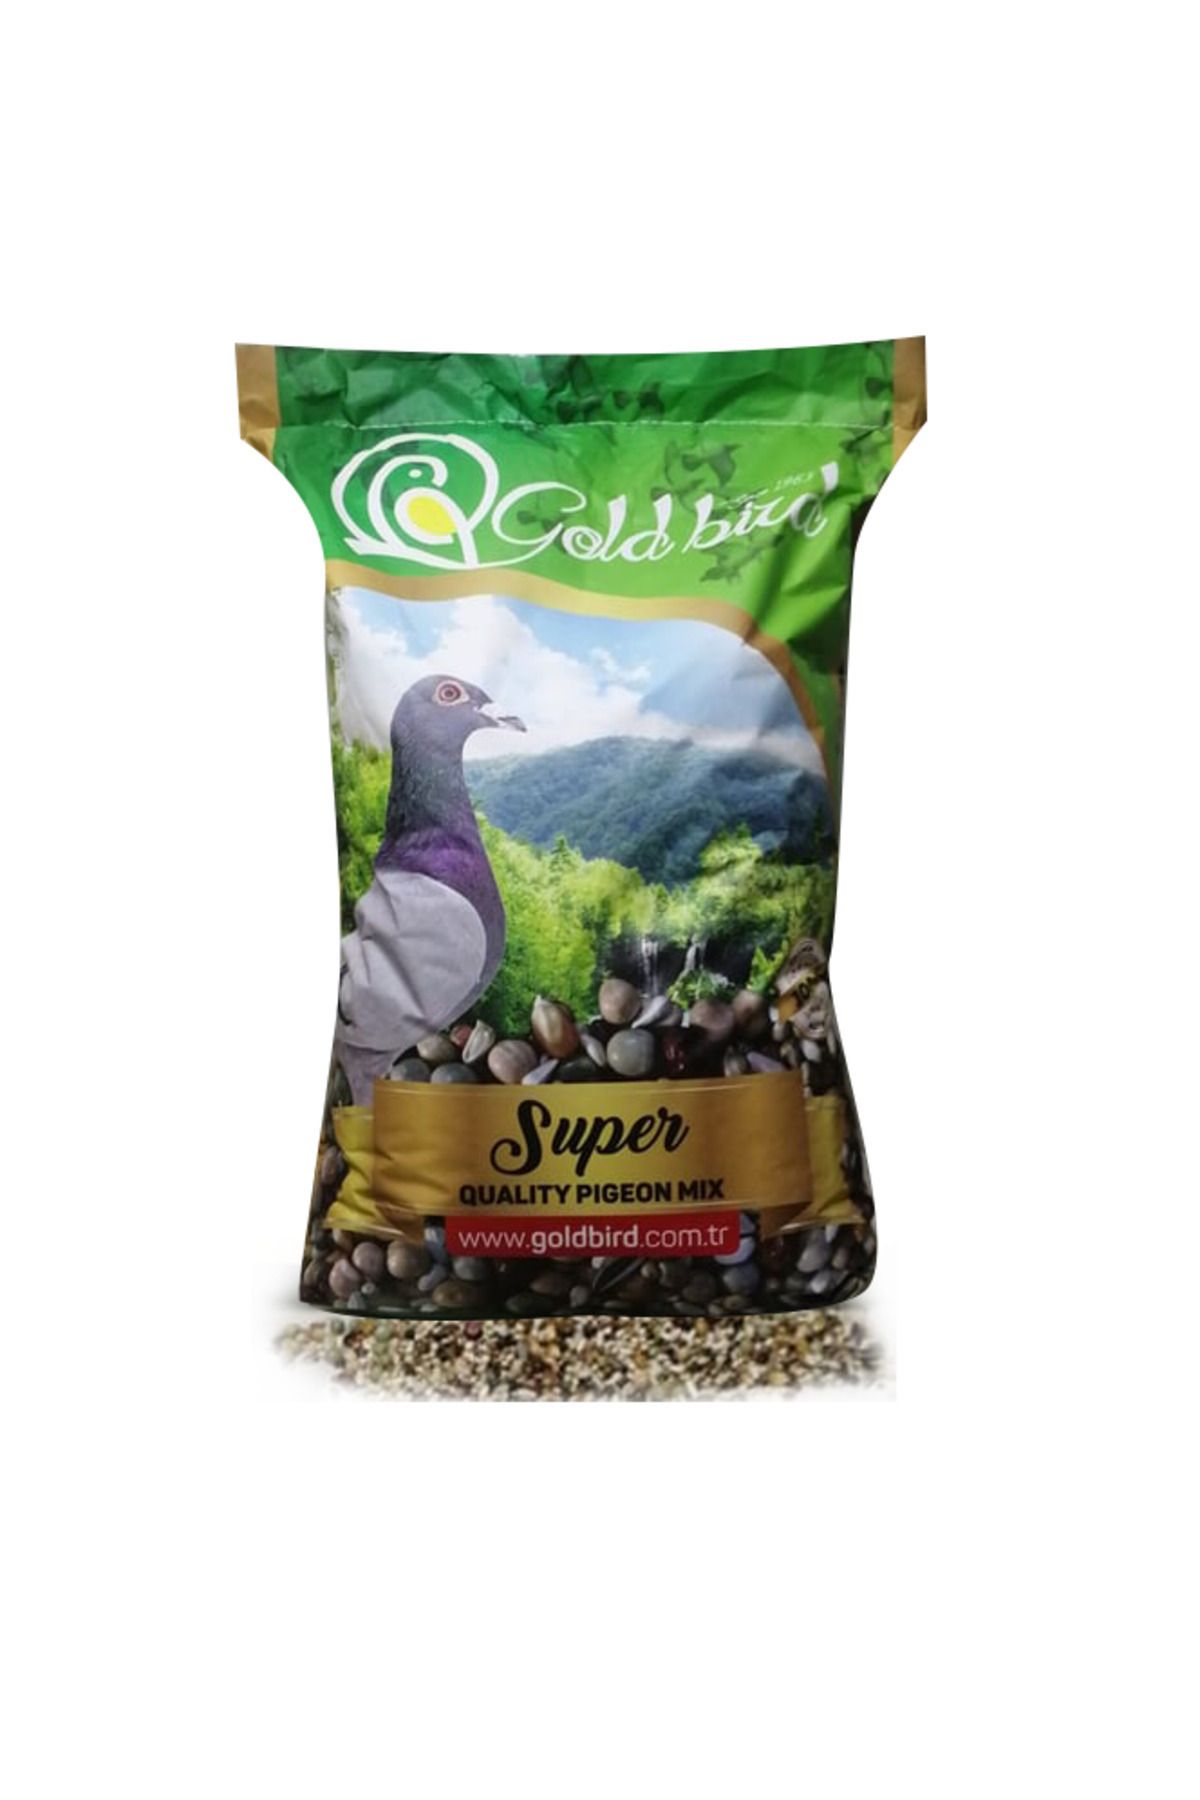 Fauna Pet Supplies 20kg Buğdaysız Tozsuz Lüx Gold Bird Güvercin Yemi Süper Karışık Yem Pigeon Mix